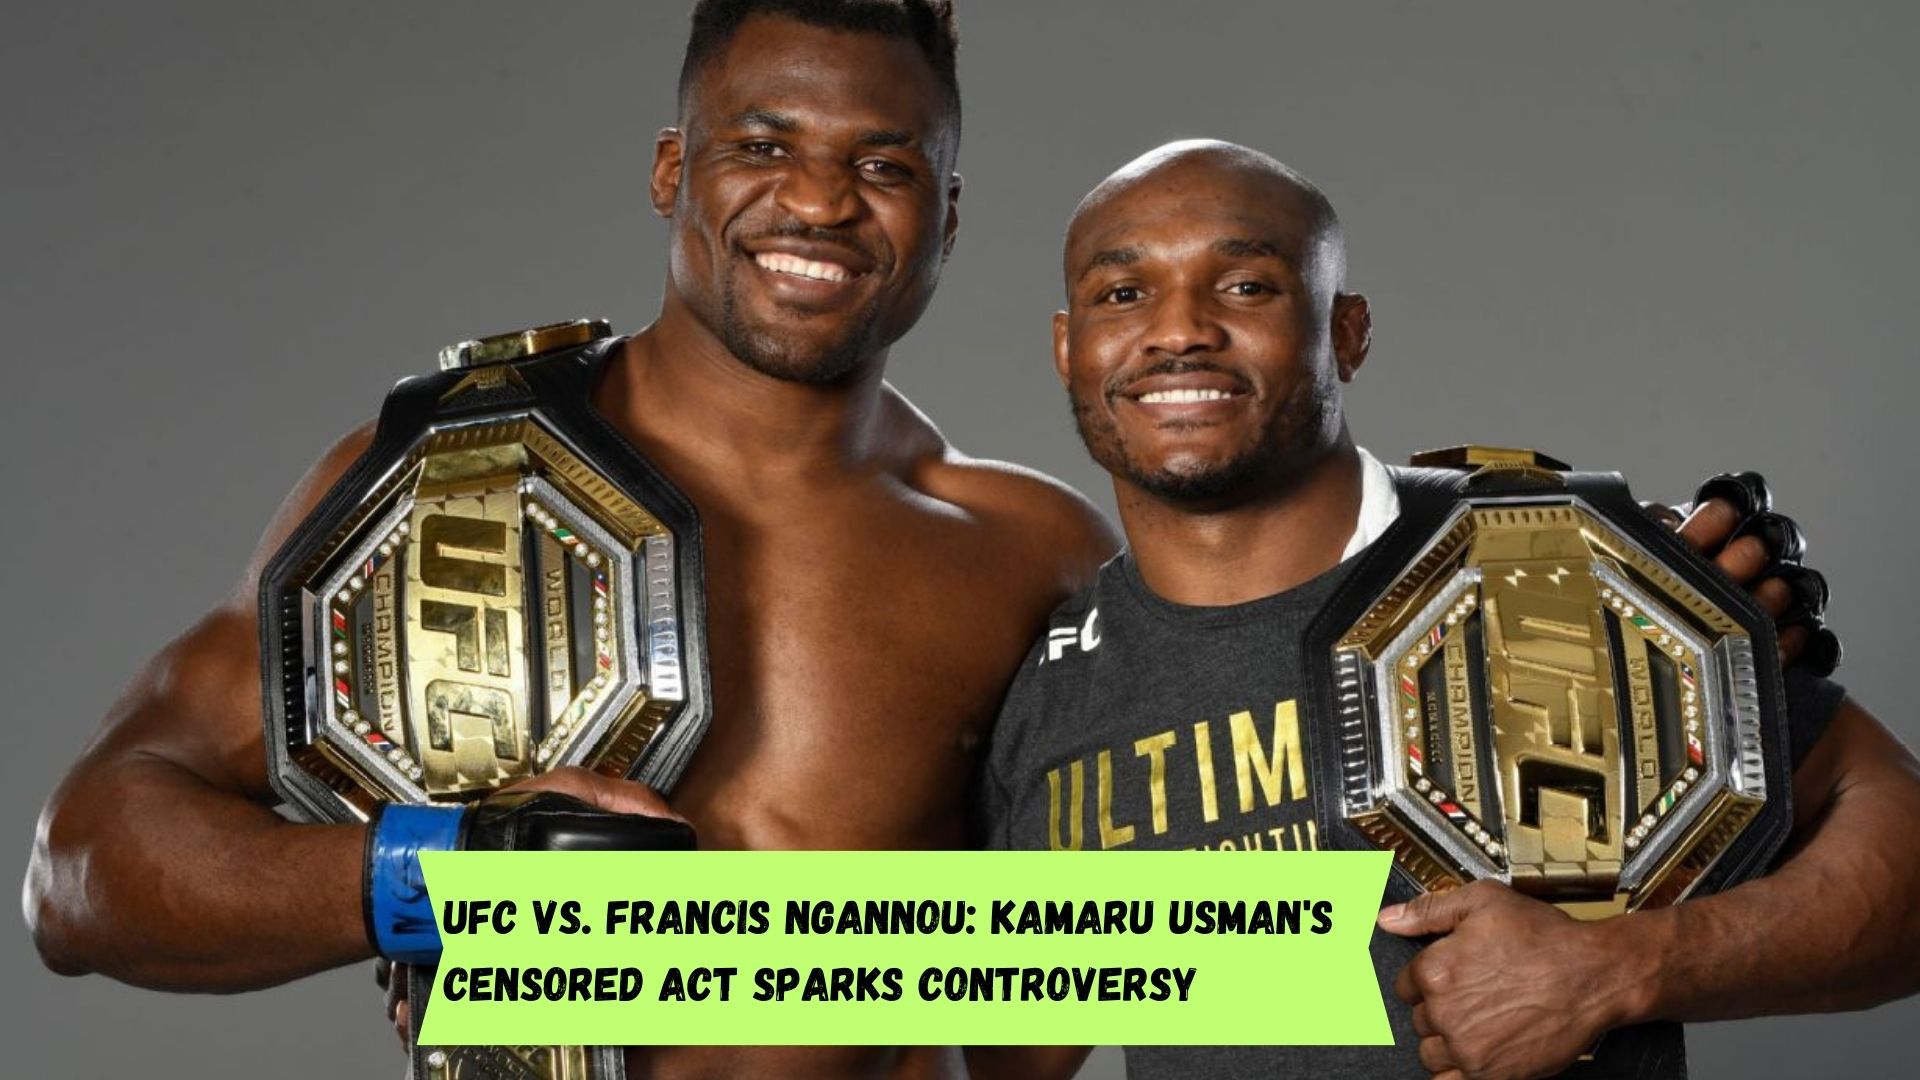 UFC vs. Francis Ngannou: Kamaru Usman's Censored Act Sparks Controversy